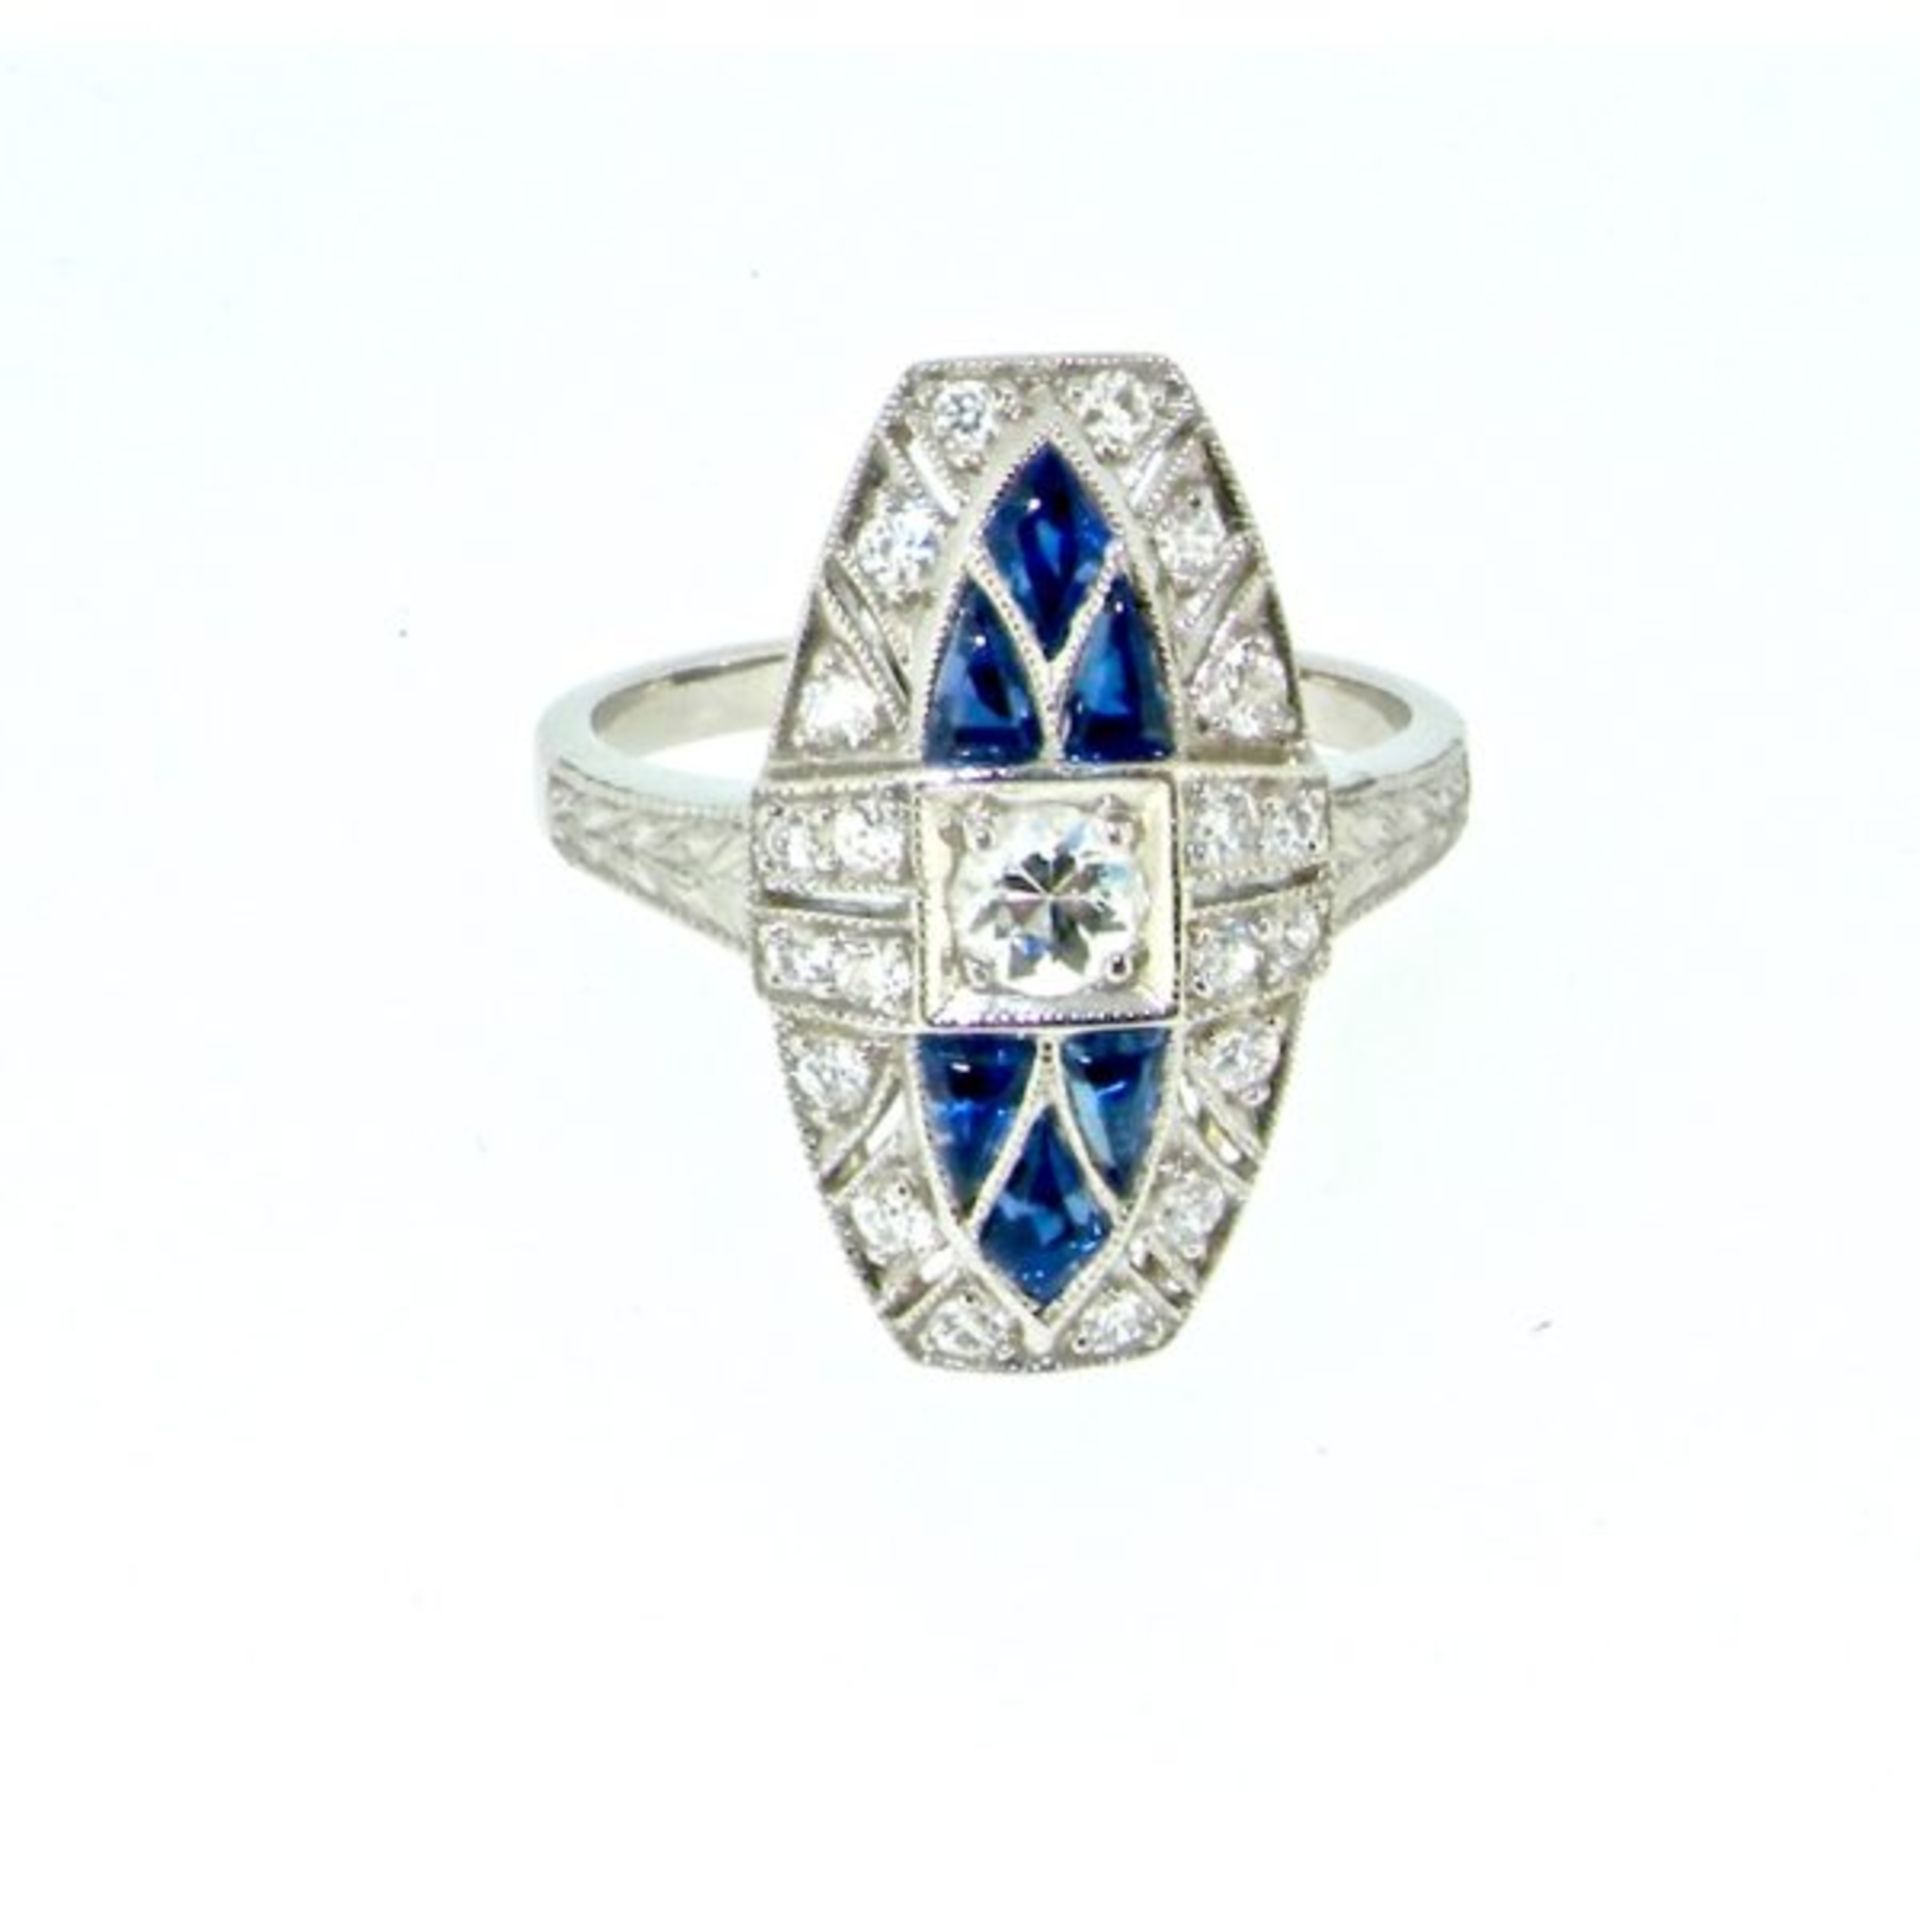 A Platinum Art Deco Sapphire And Diamond Ring - Image 2 of 5